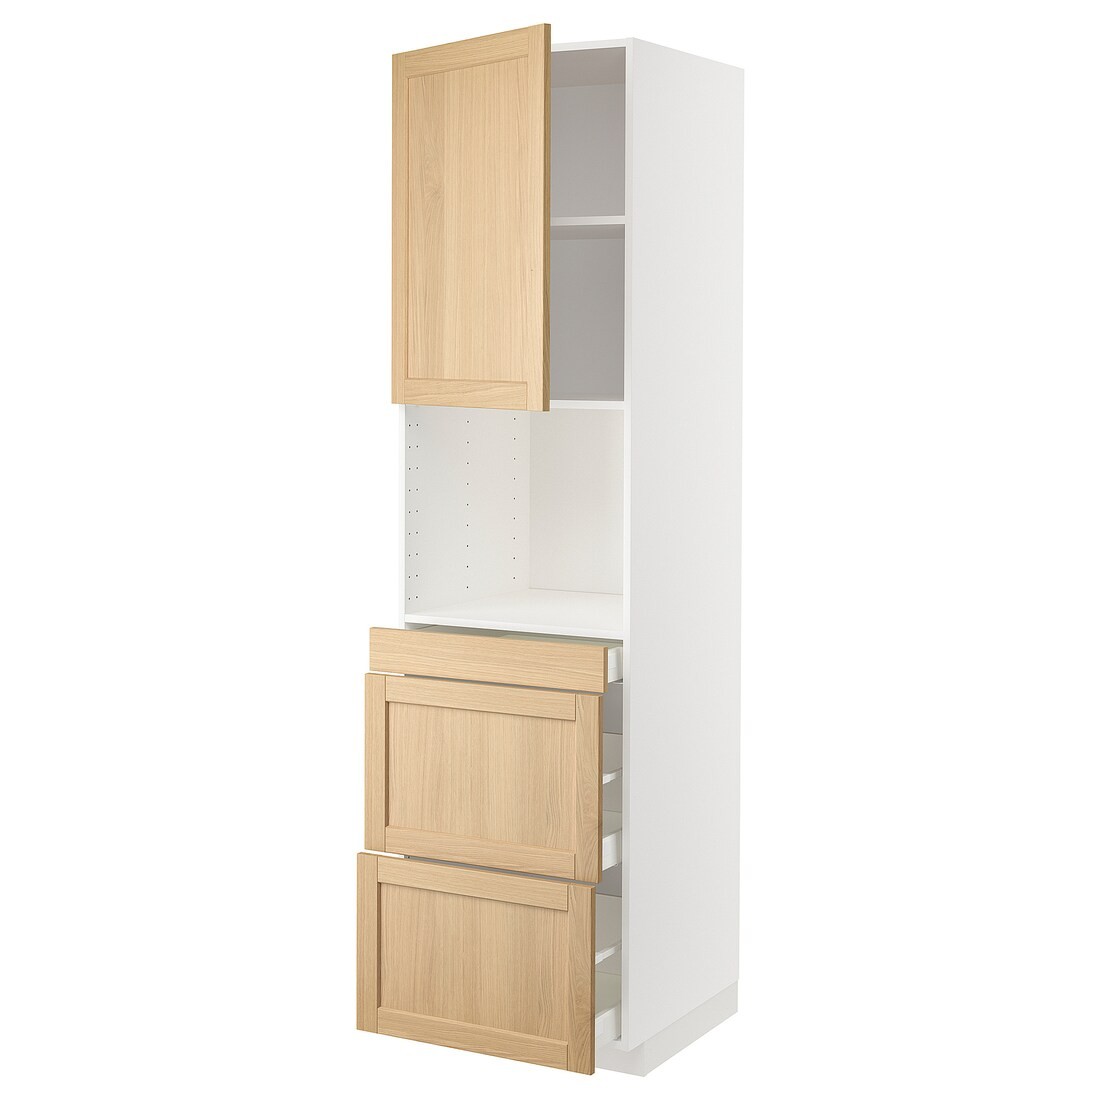 IKEA METOD / MAXIMERA Висока шафа для НВЧ / дверцята / 3 шухляди, білий / дуб Forsbacka, 60x60x220 см 49509563 495.095.63